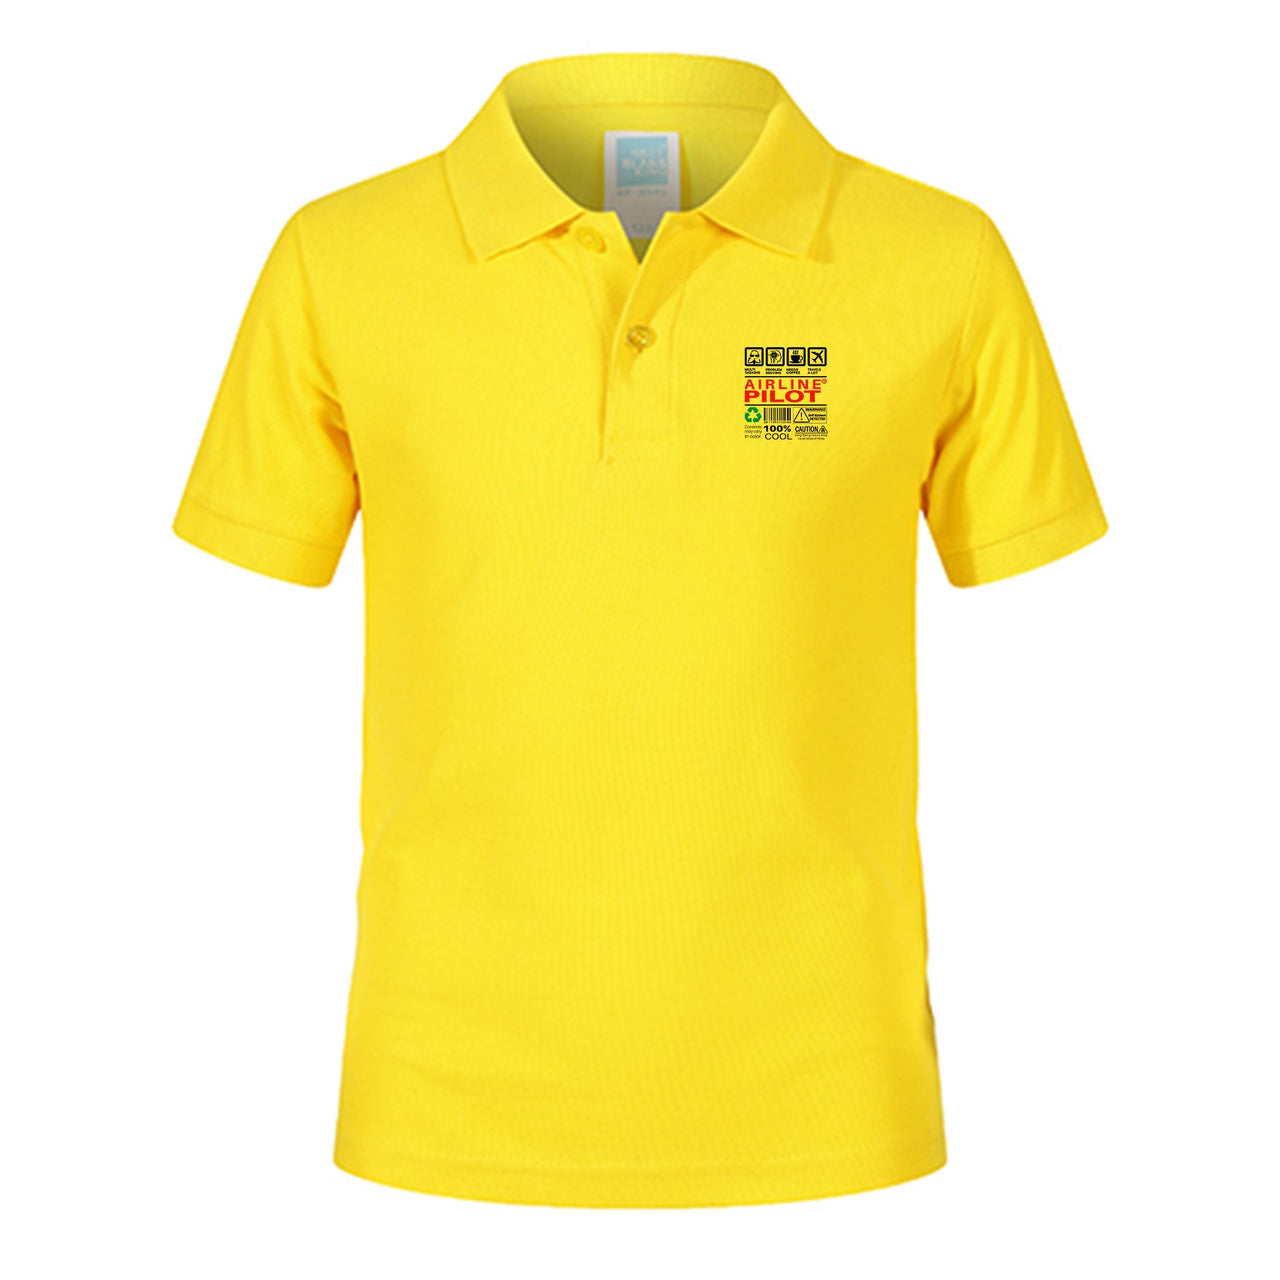 Airline Pilot Label Designed Children Polo T-Shirts